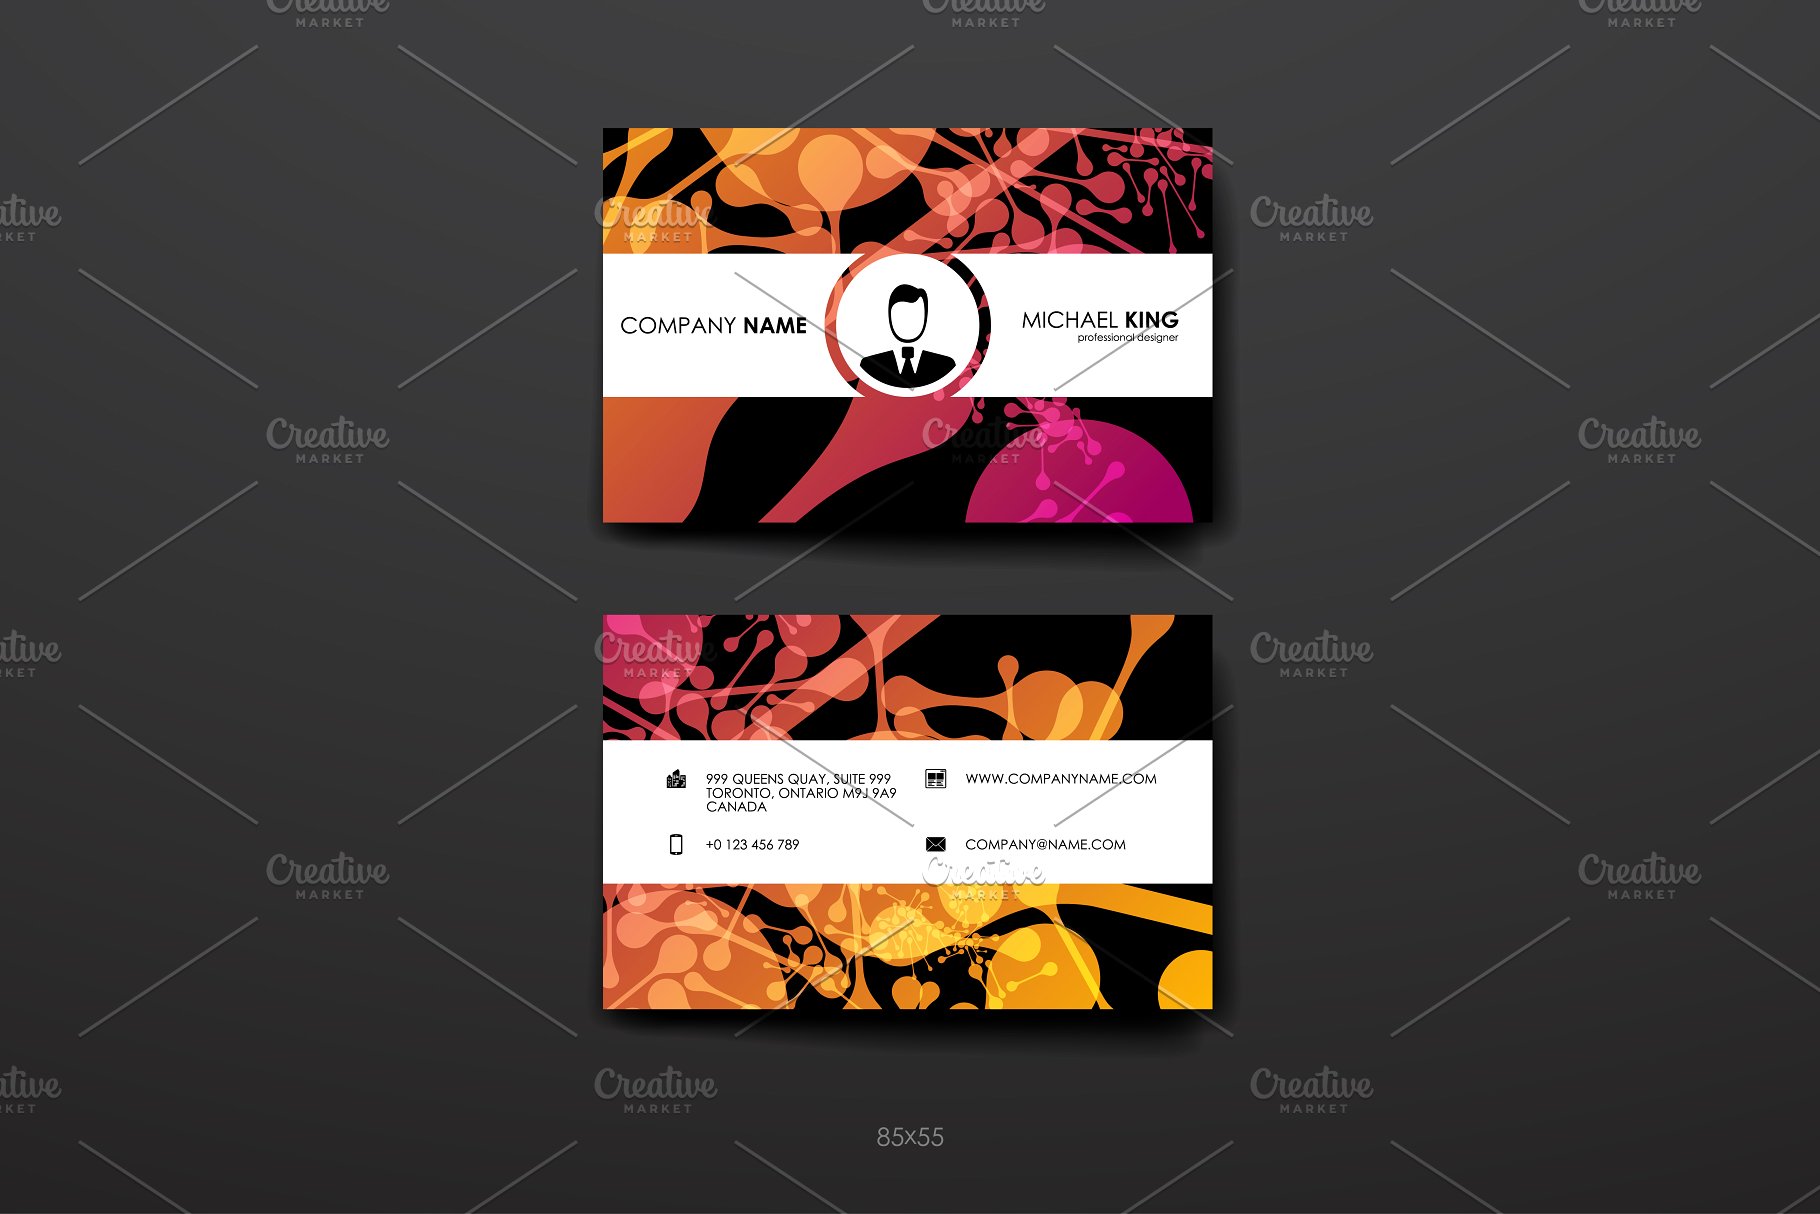 惊艳酷炫的名片模板  Amazing Business Cards Templates插图(4)